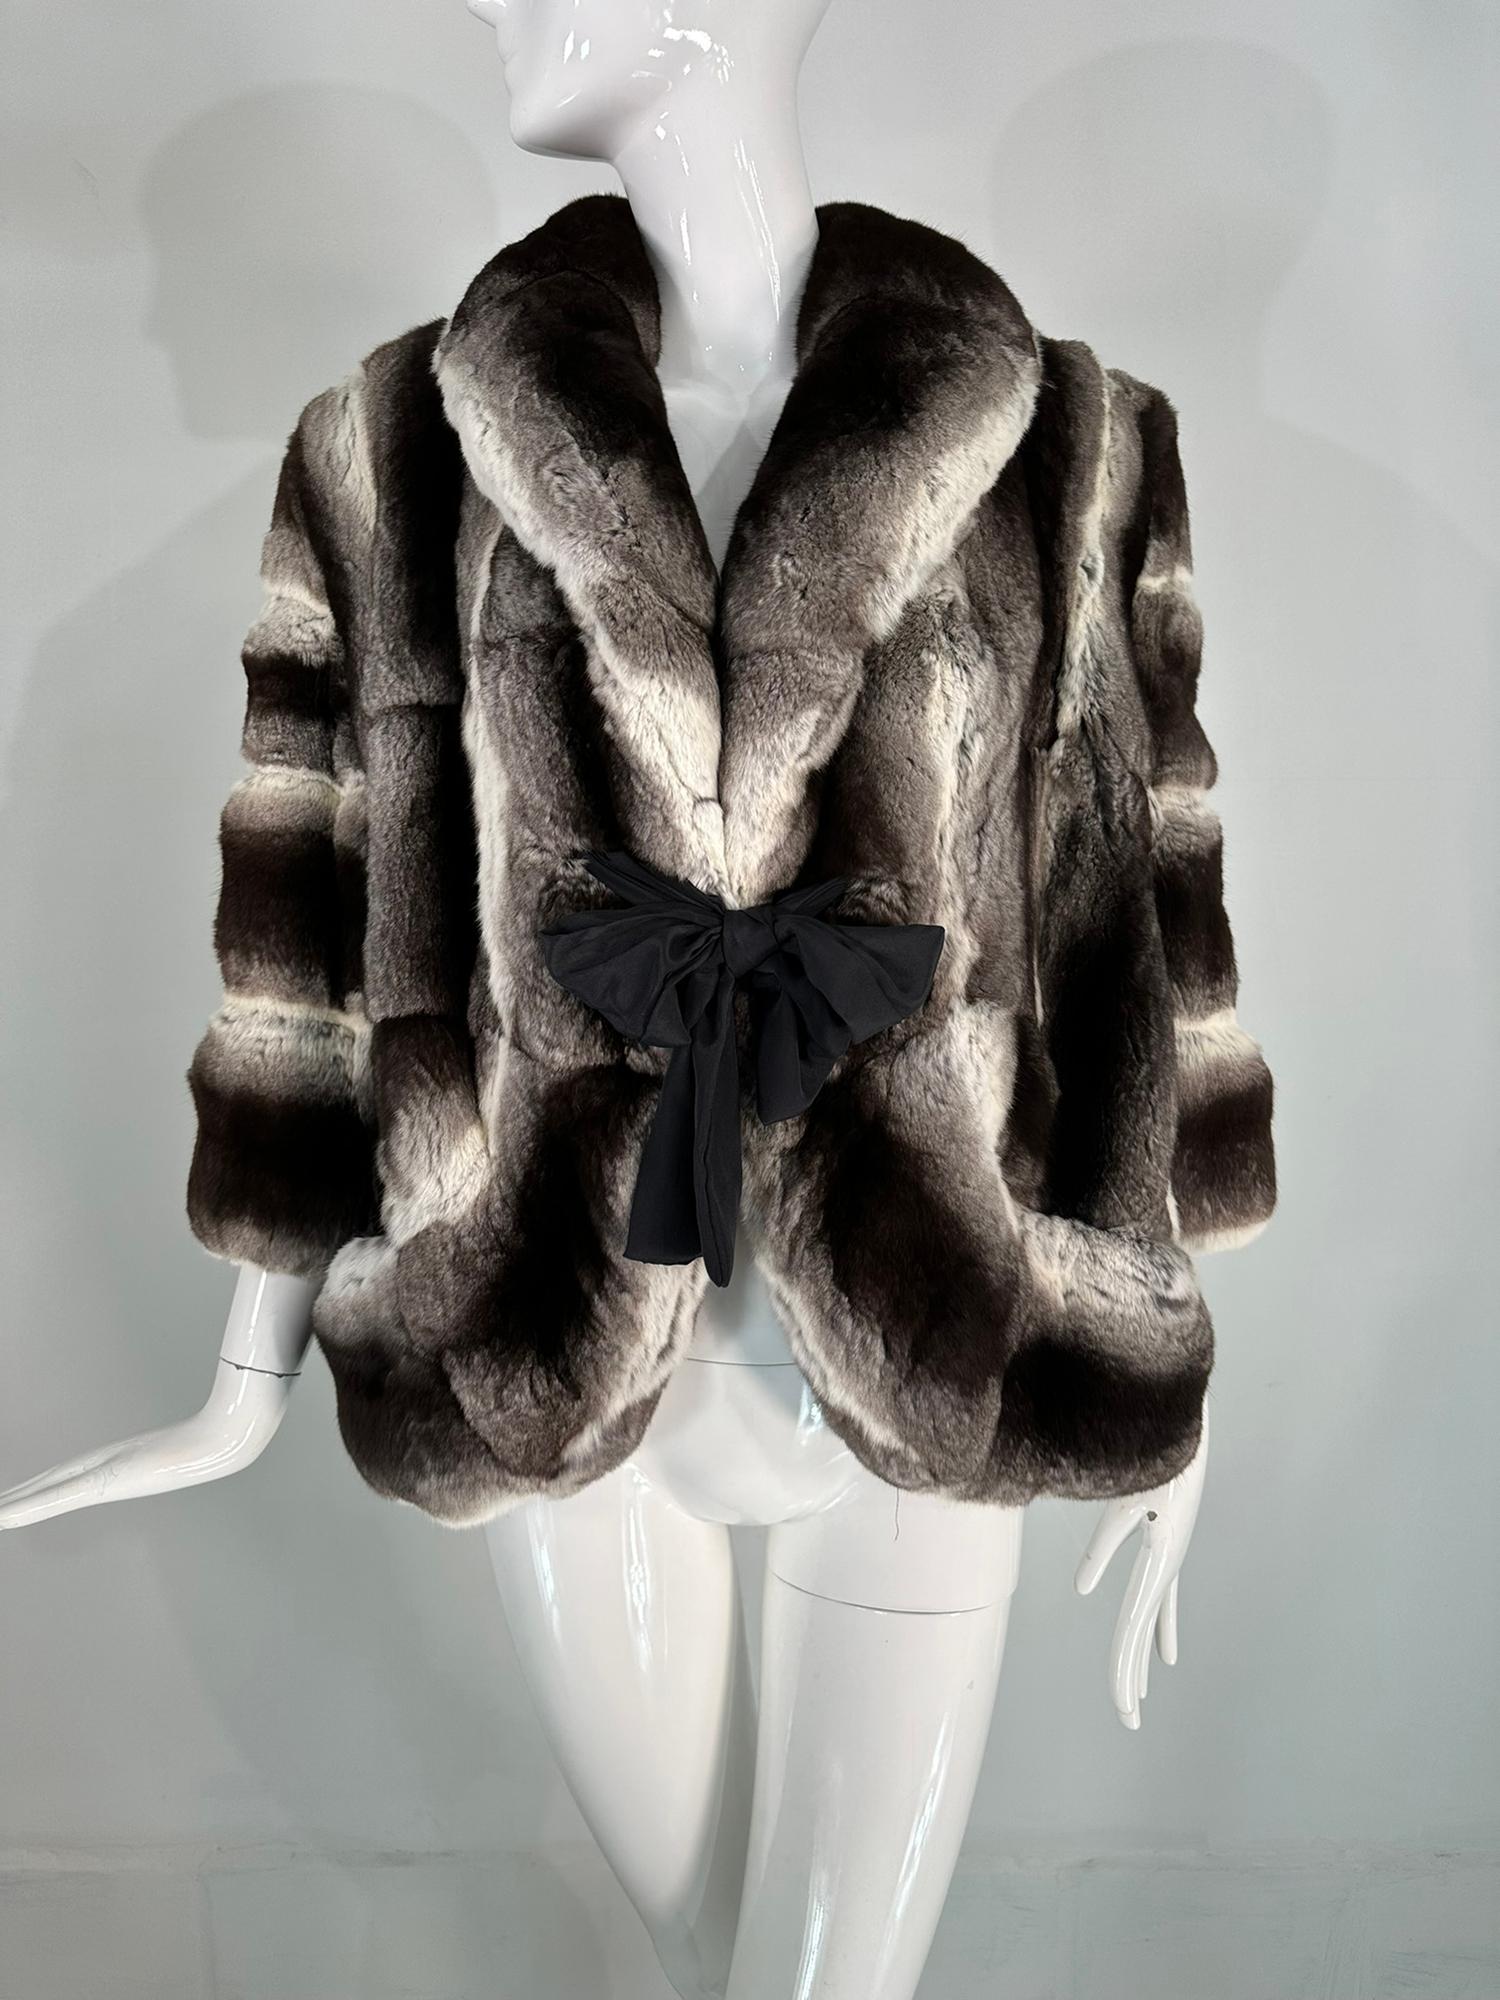 Dennis Basso Chinchilla Fur Jacket in Light & Dark Grey with Cream 2013 S-M 2013 For Sale 12